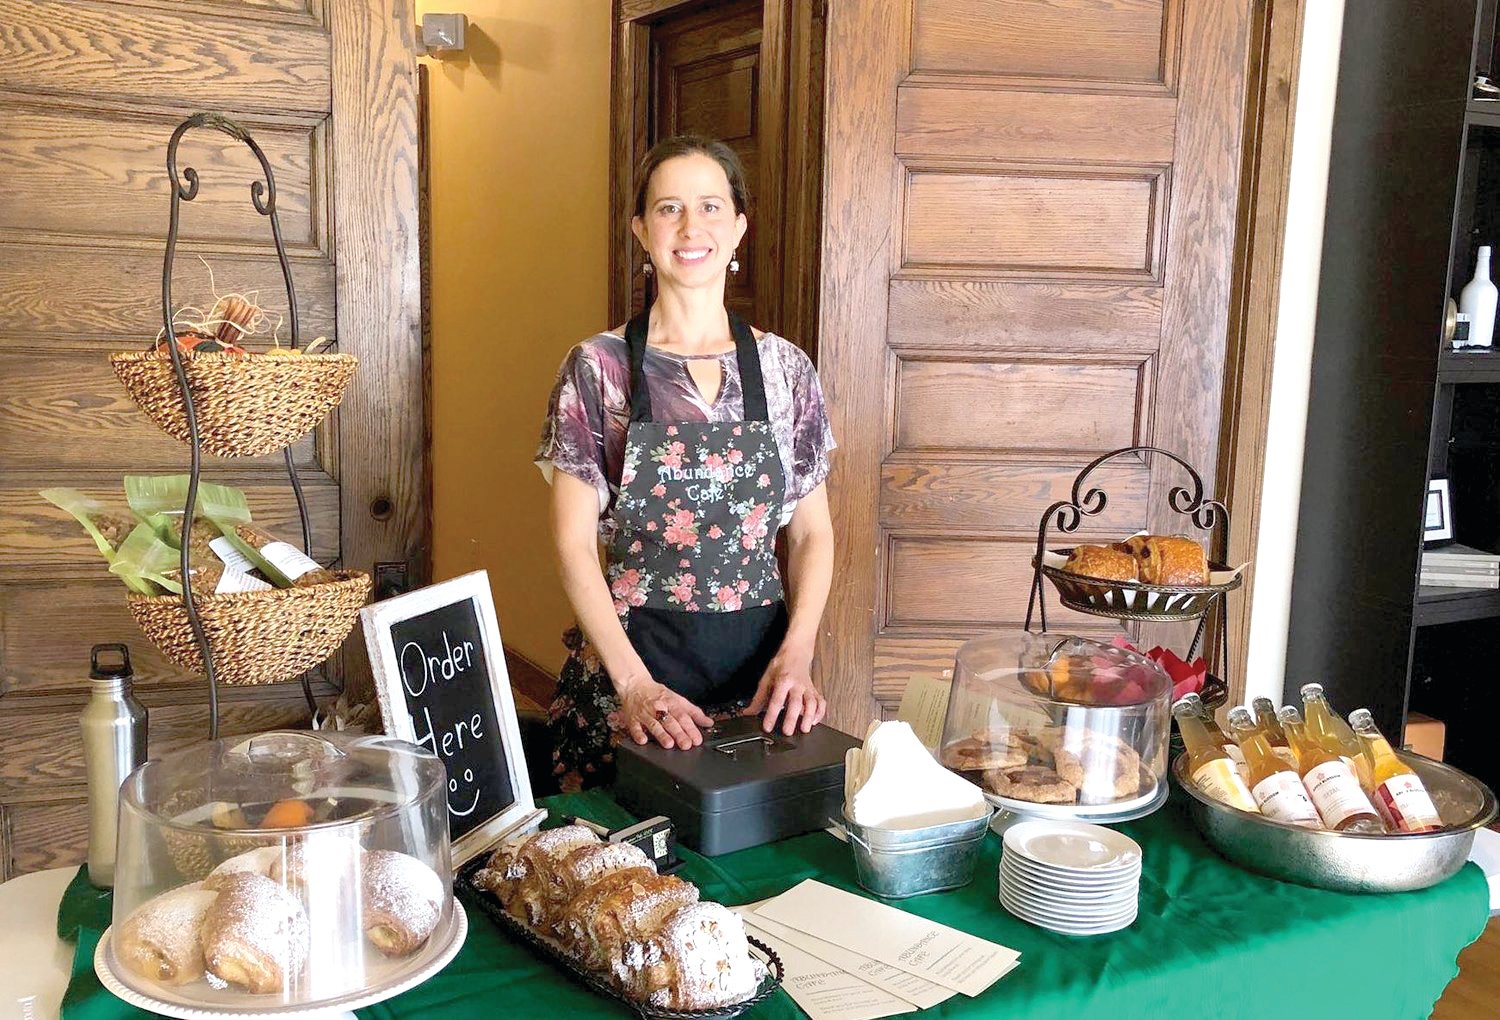 Abundance Café owner Erin Meadows